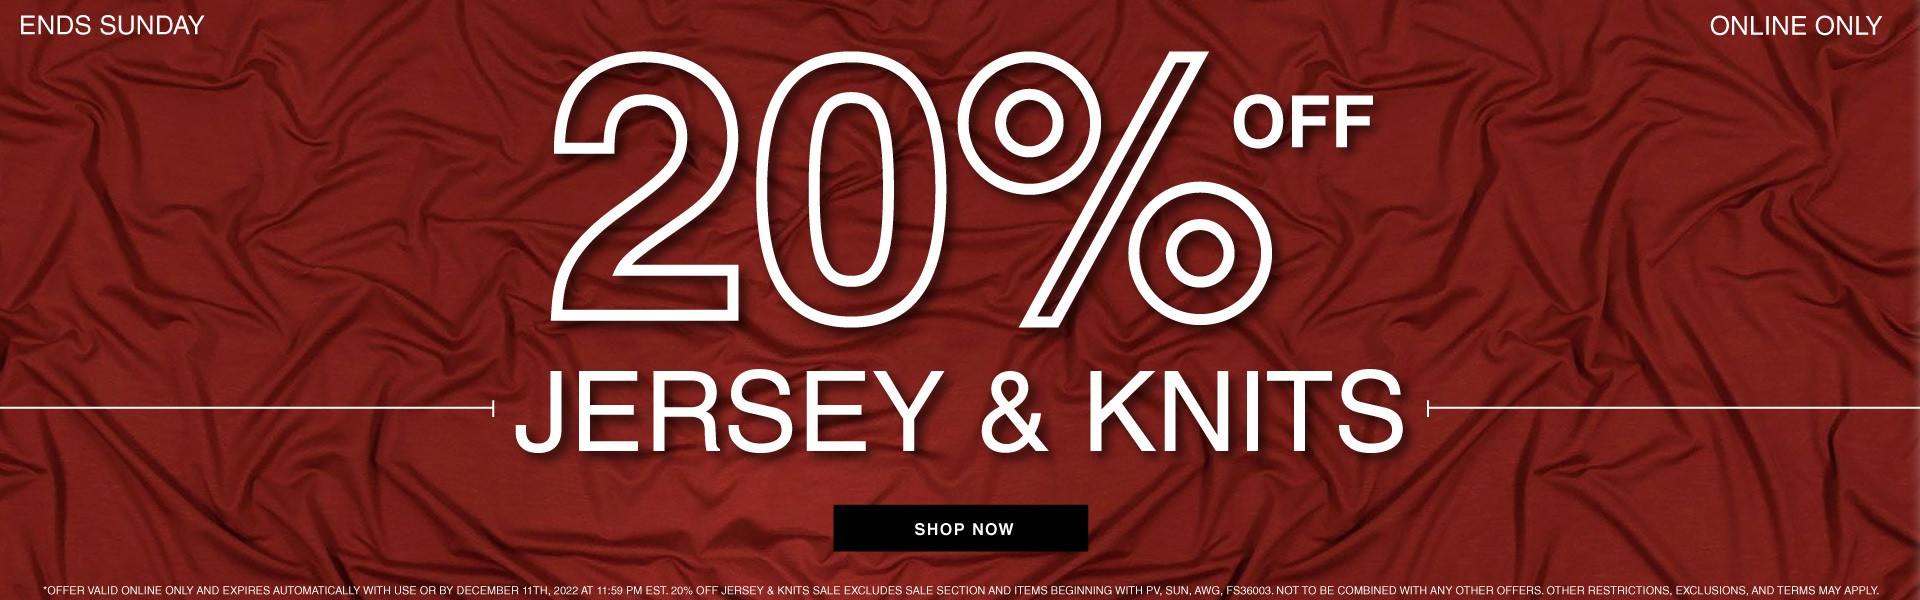 Shop 20% Off Jersey & Knit Fabrics Now!